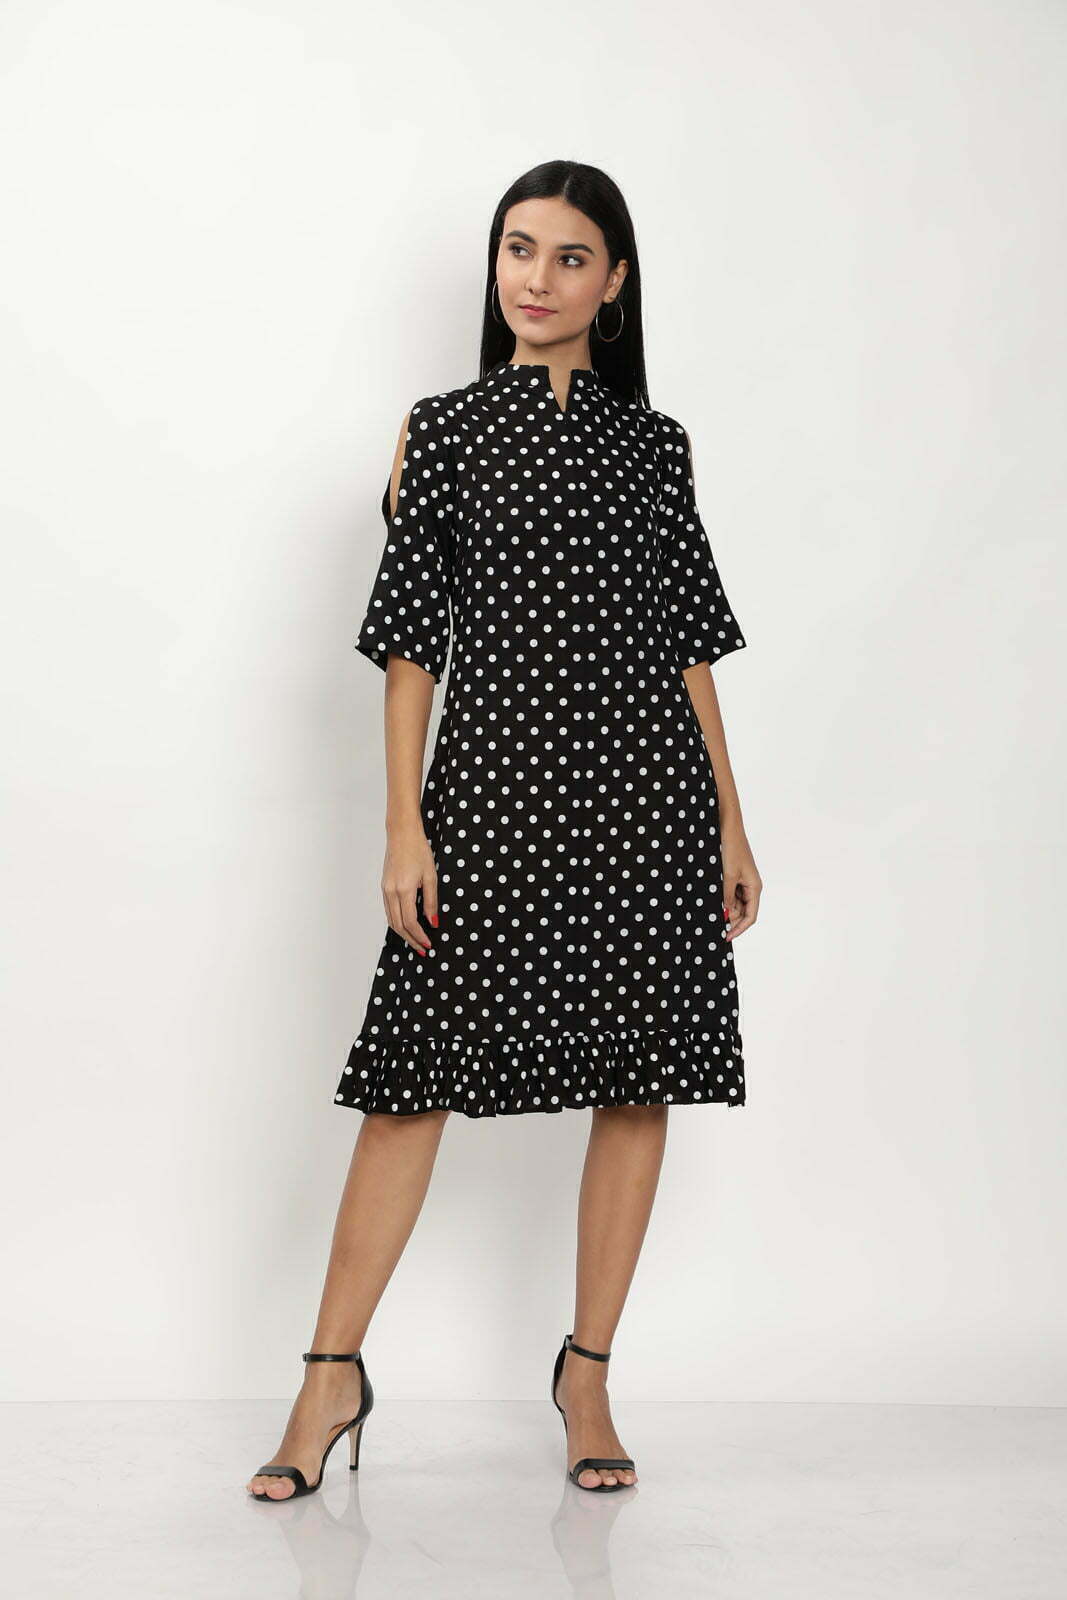 Chic Style Black Polka Dot Dress